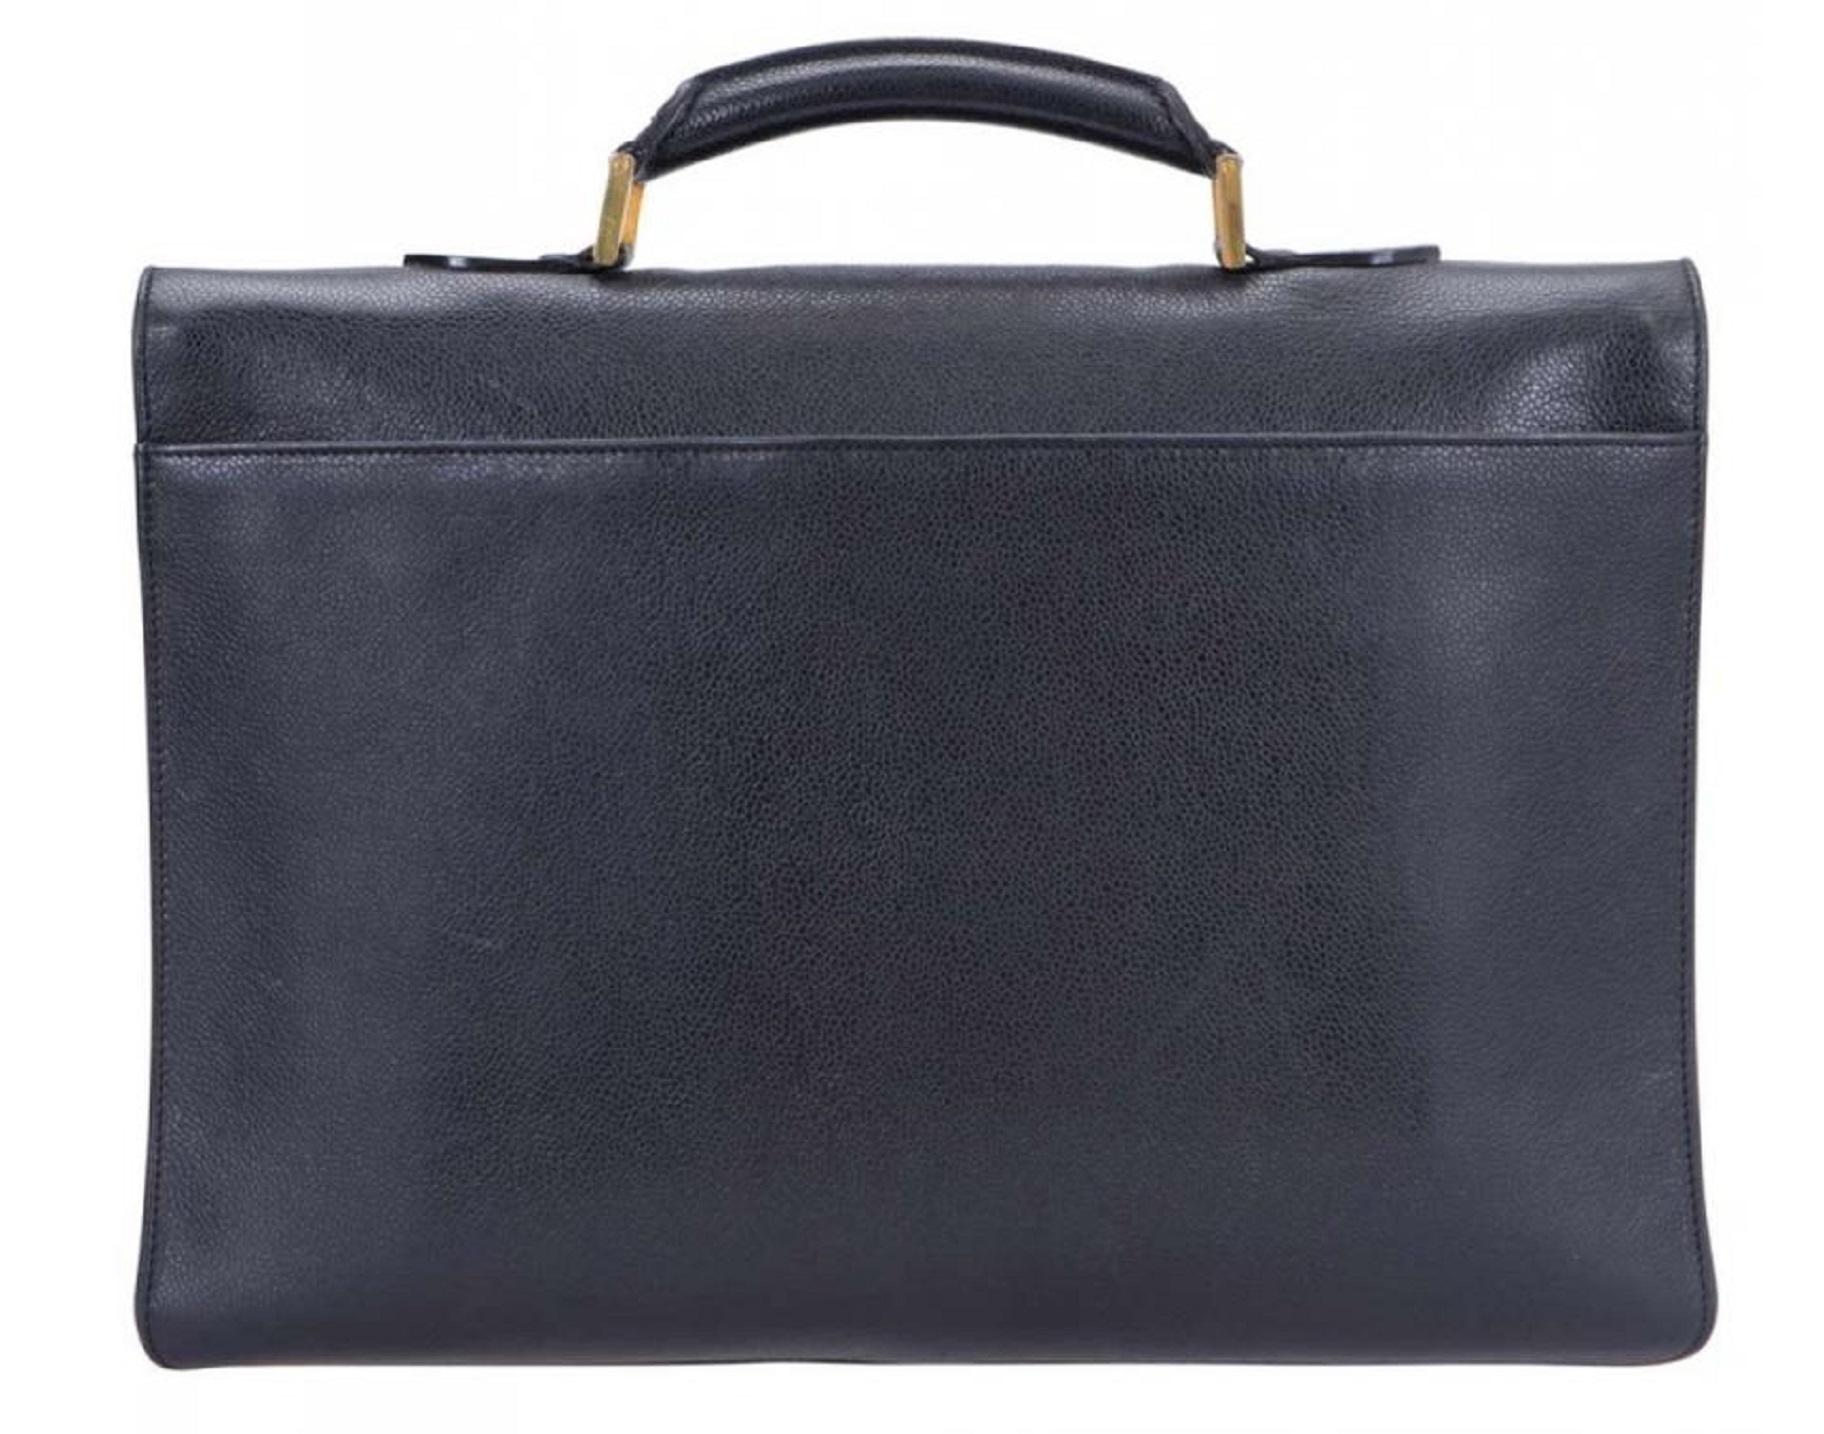 Women's Chanel Black Caviar Leather Attache Briefcase Business Bag 202ca84